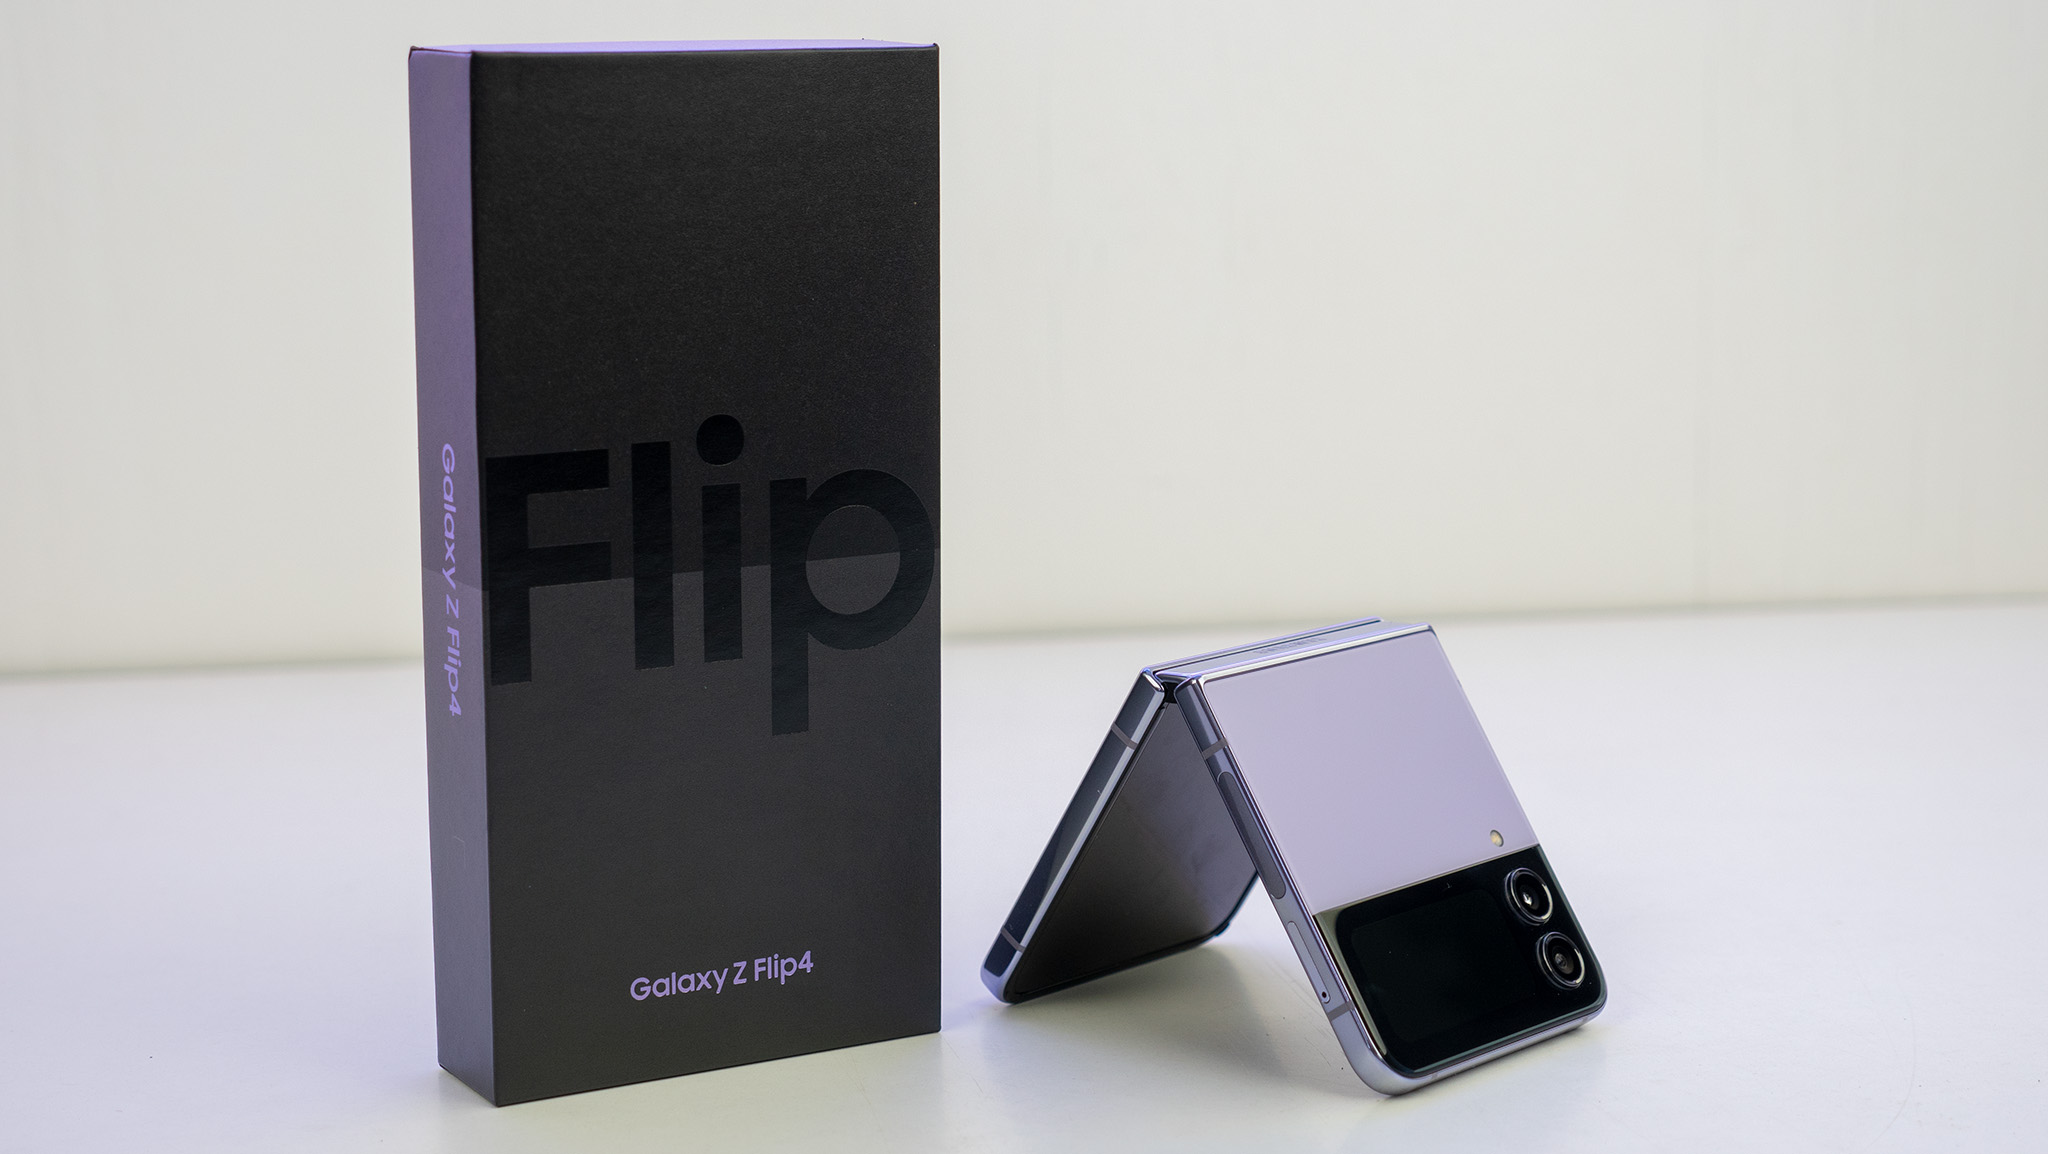 Samsung Galaxy Z Flip 4 in Bora Purple next to the retail box